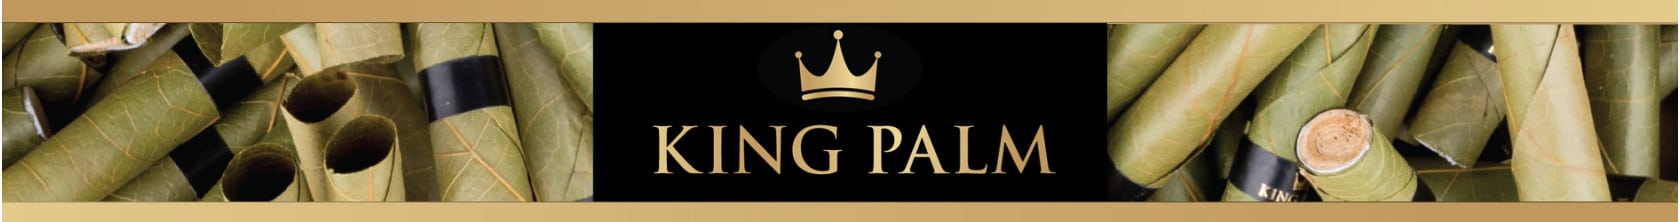 king-palm-banner-1800x250-1680x222